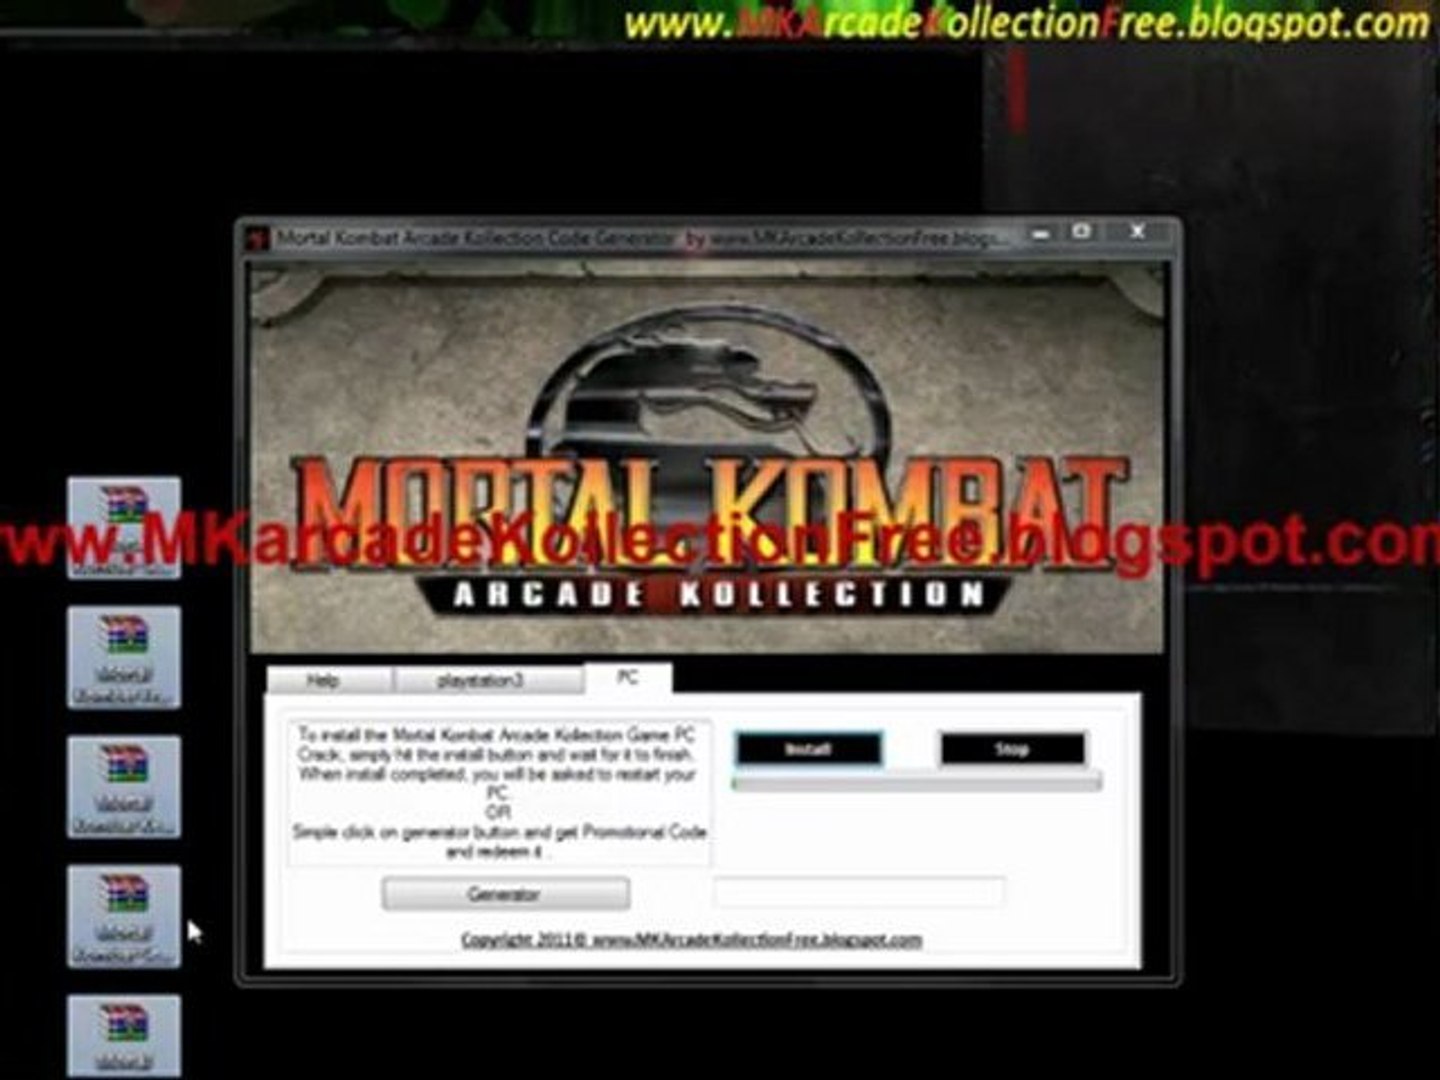 Mortal Kombat Arcade kollection Skidrow Crack + DLC Code Generator